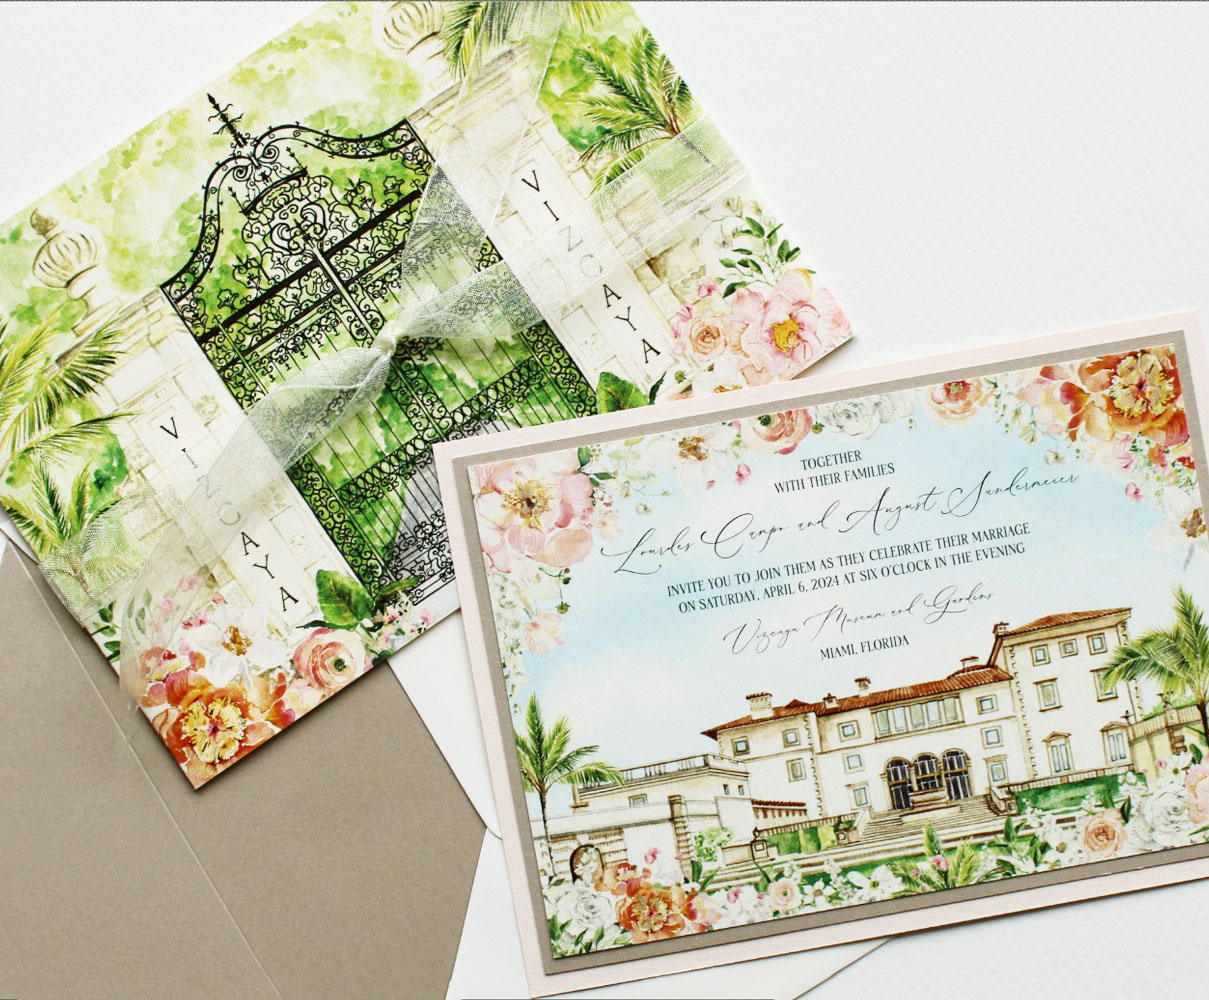 vizcaya-wedding-invitations